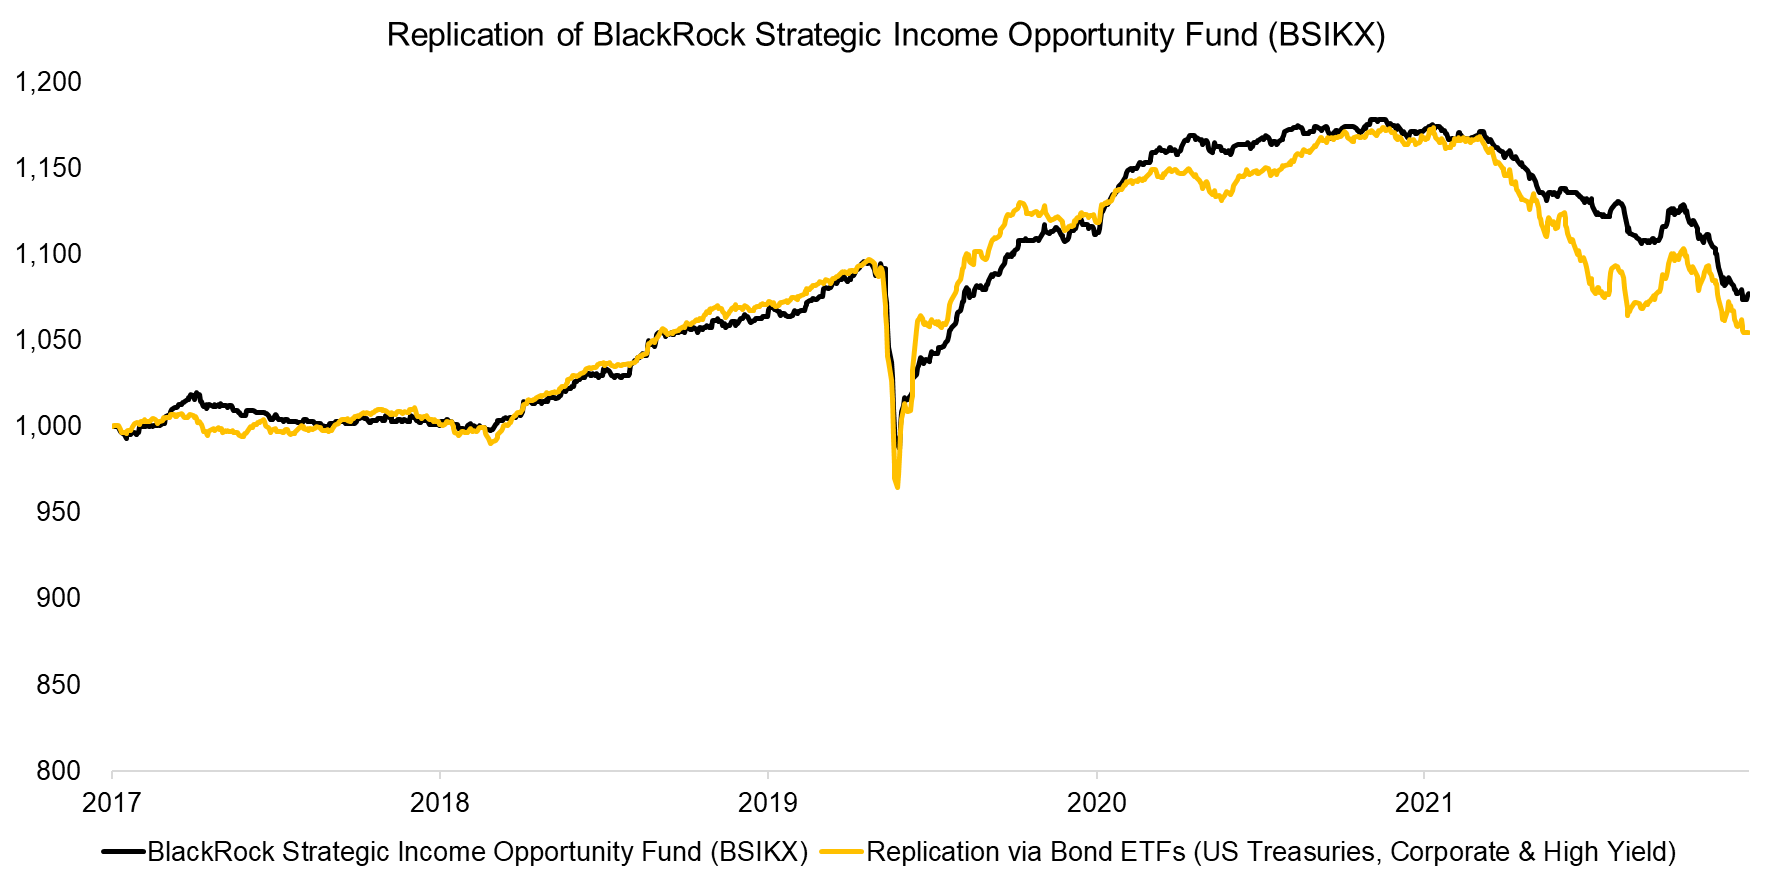 Replication of BlackRock Strategic Income Opportunity Fund (BSIKX)